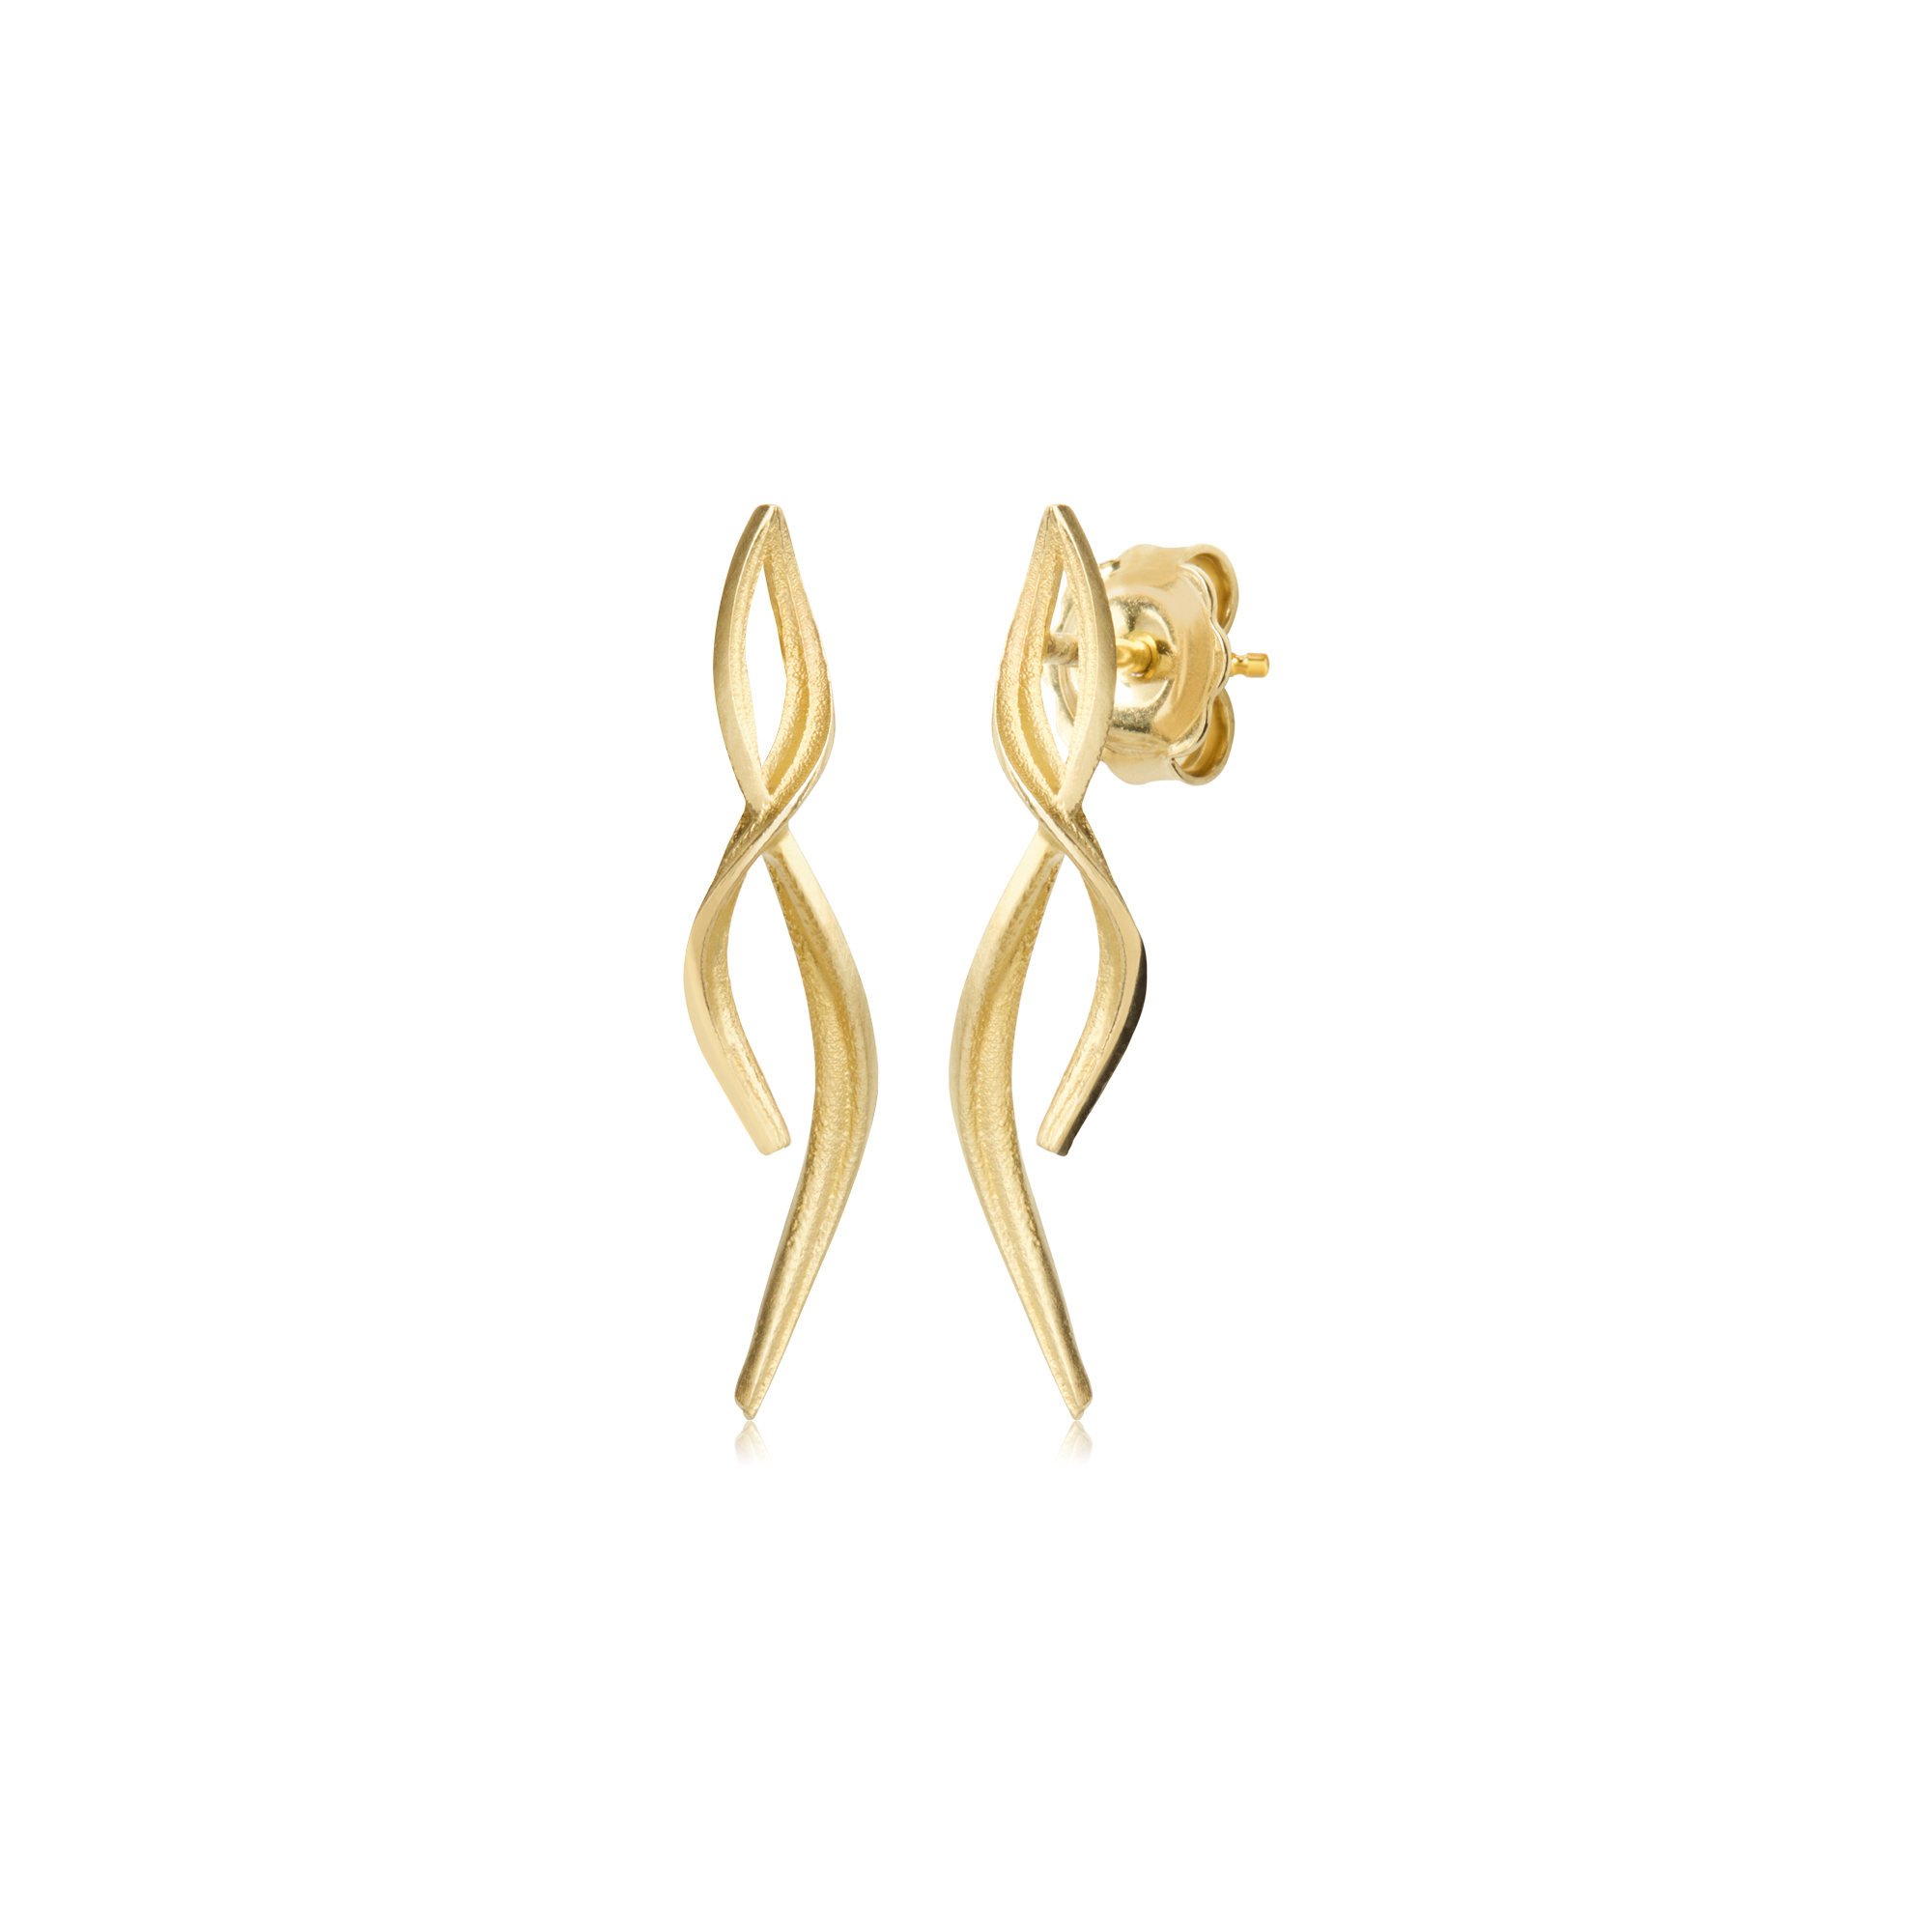 Delta gold small earrings